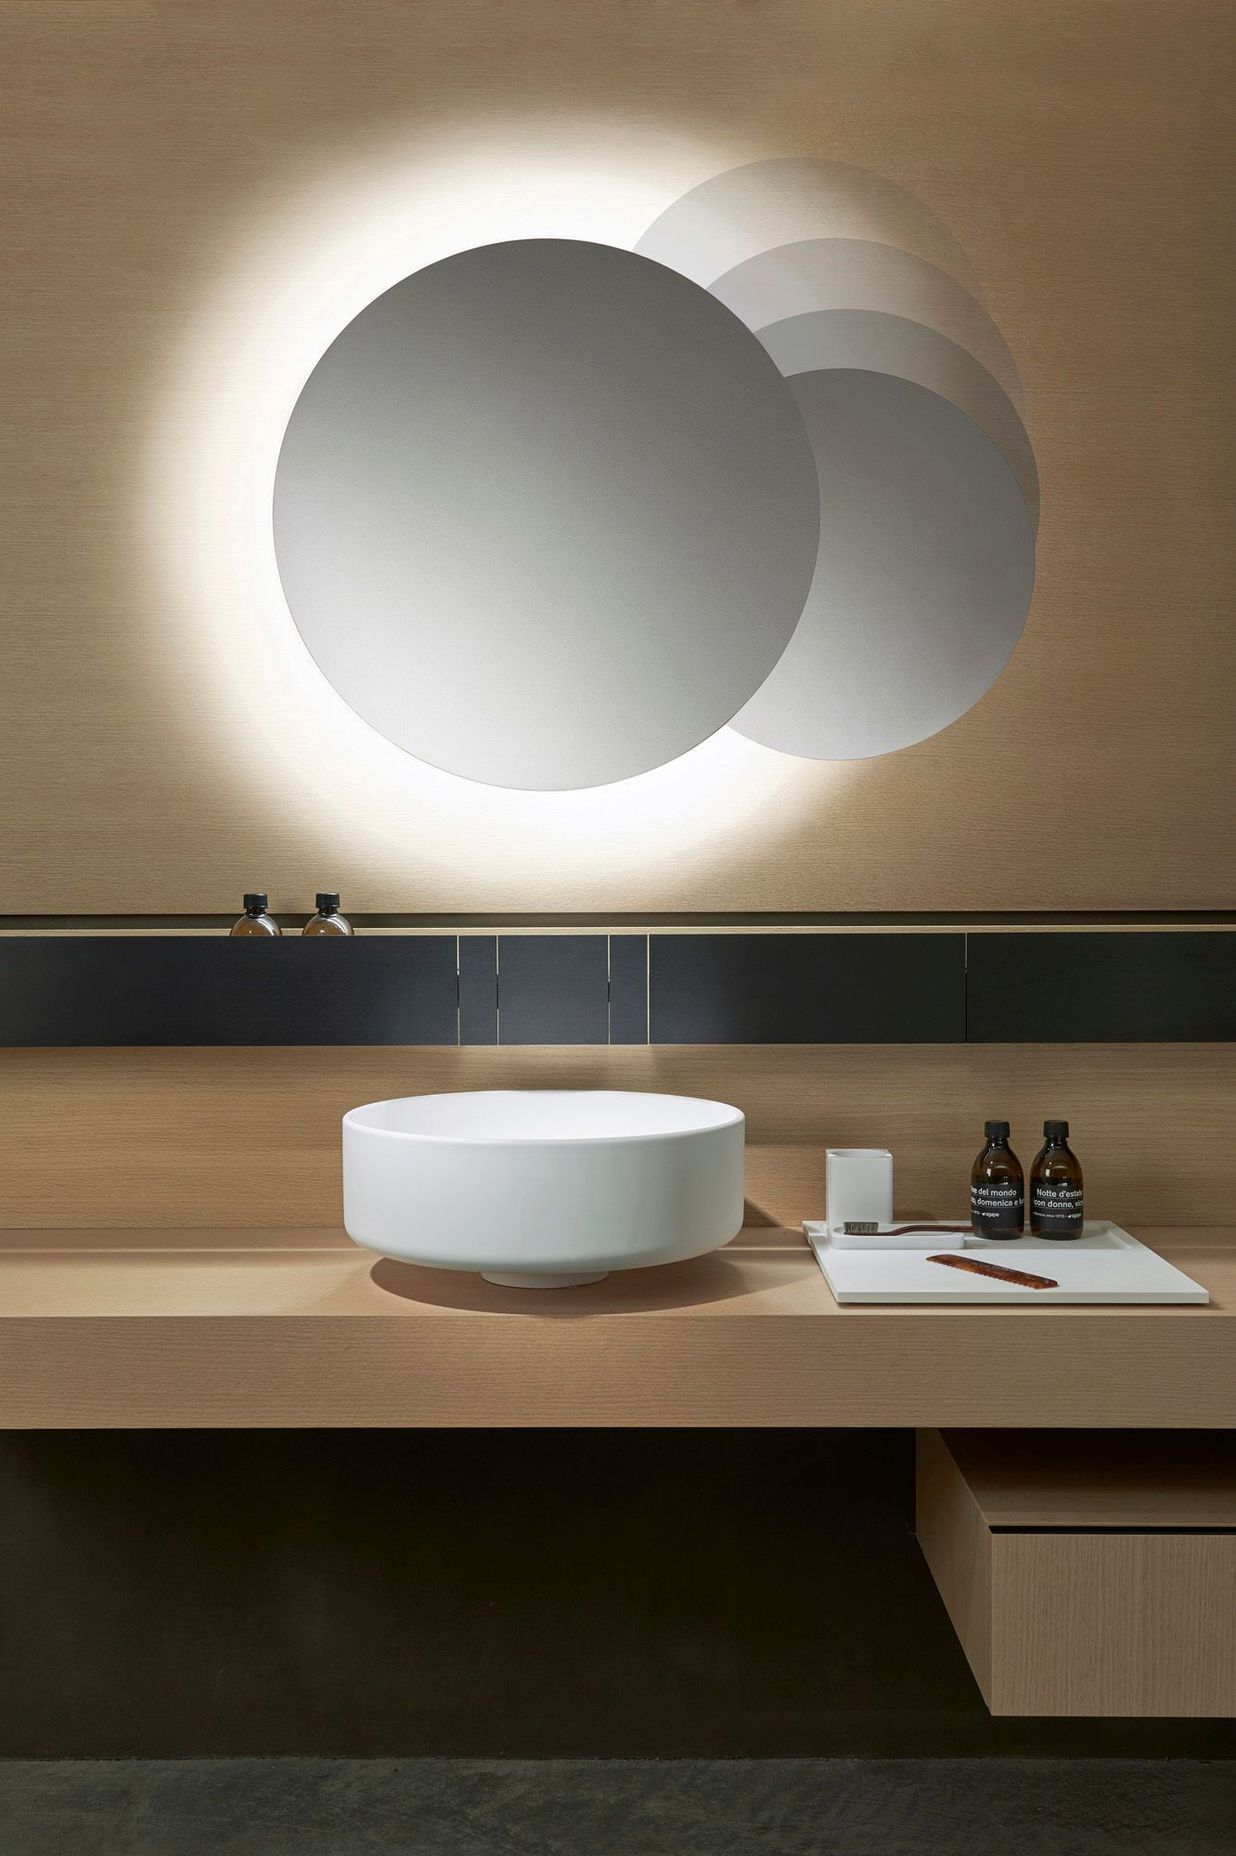 The SEN bathroom range imparts a  modern, Zen-like peacefulness.